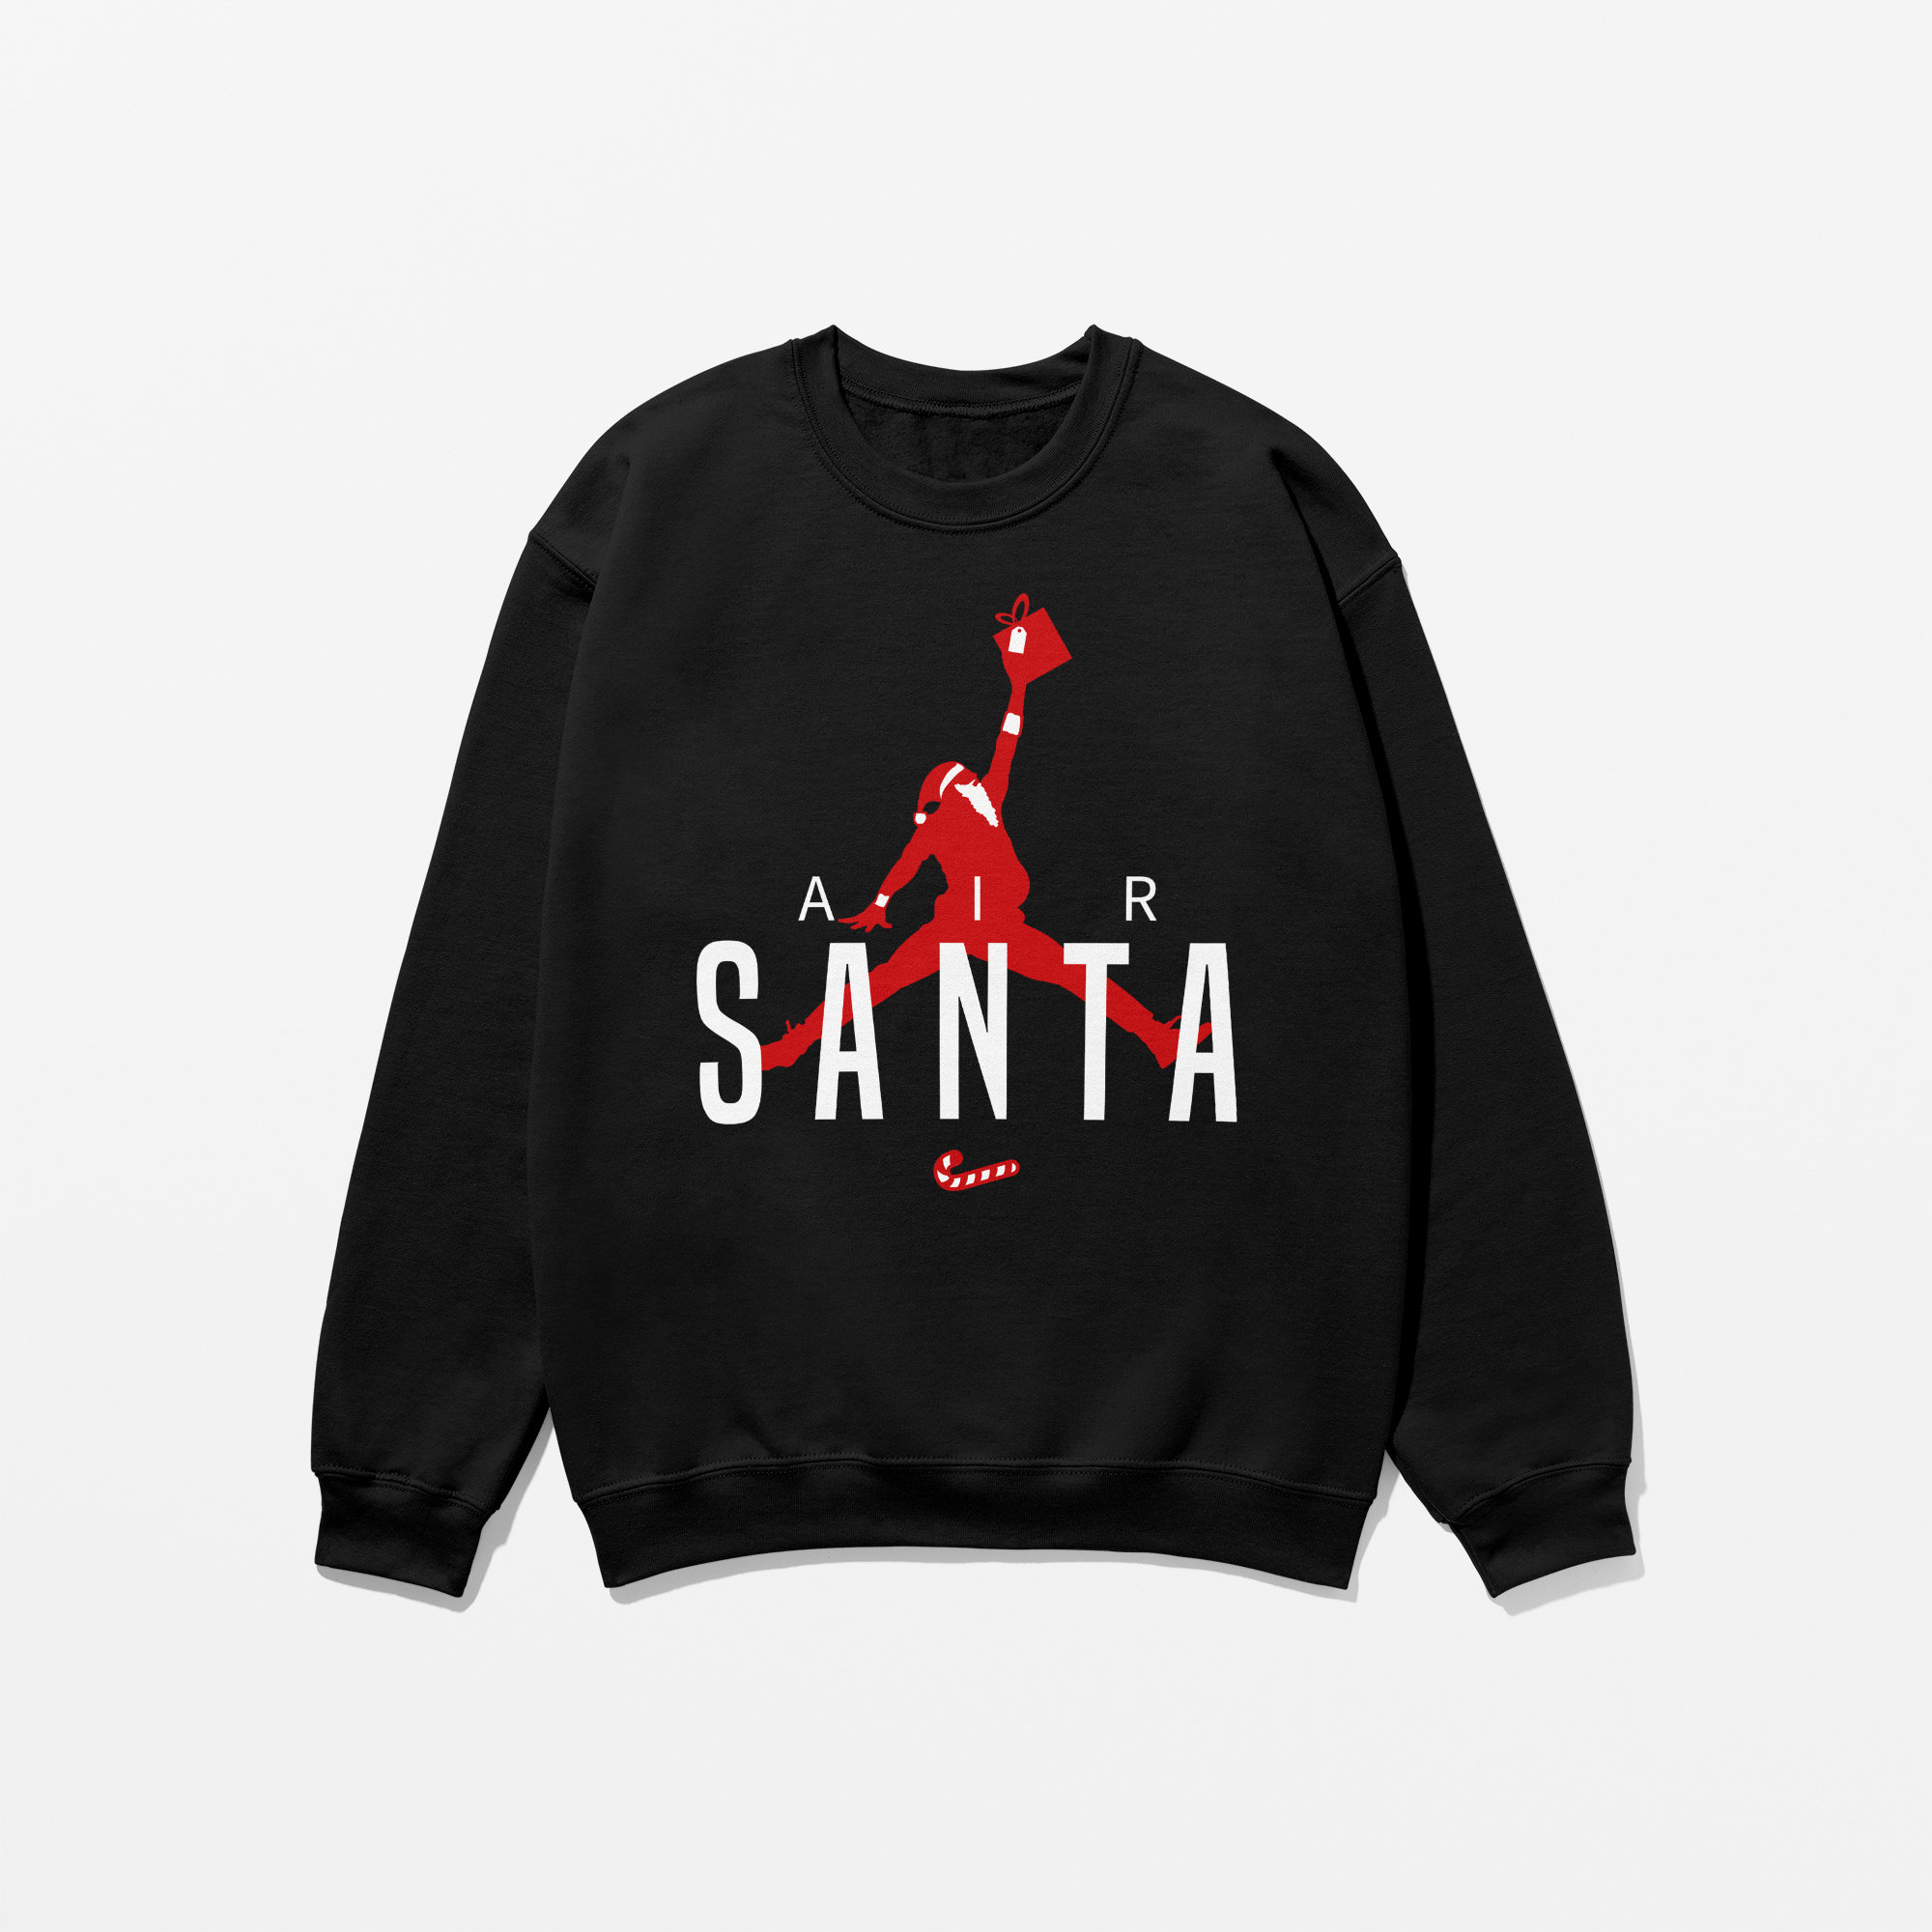 Atlanta Hawks NBA Basketball Knit Pattern Ugly Christmas Sweater - Tagotee